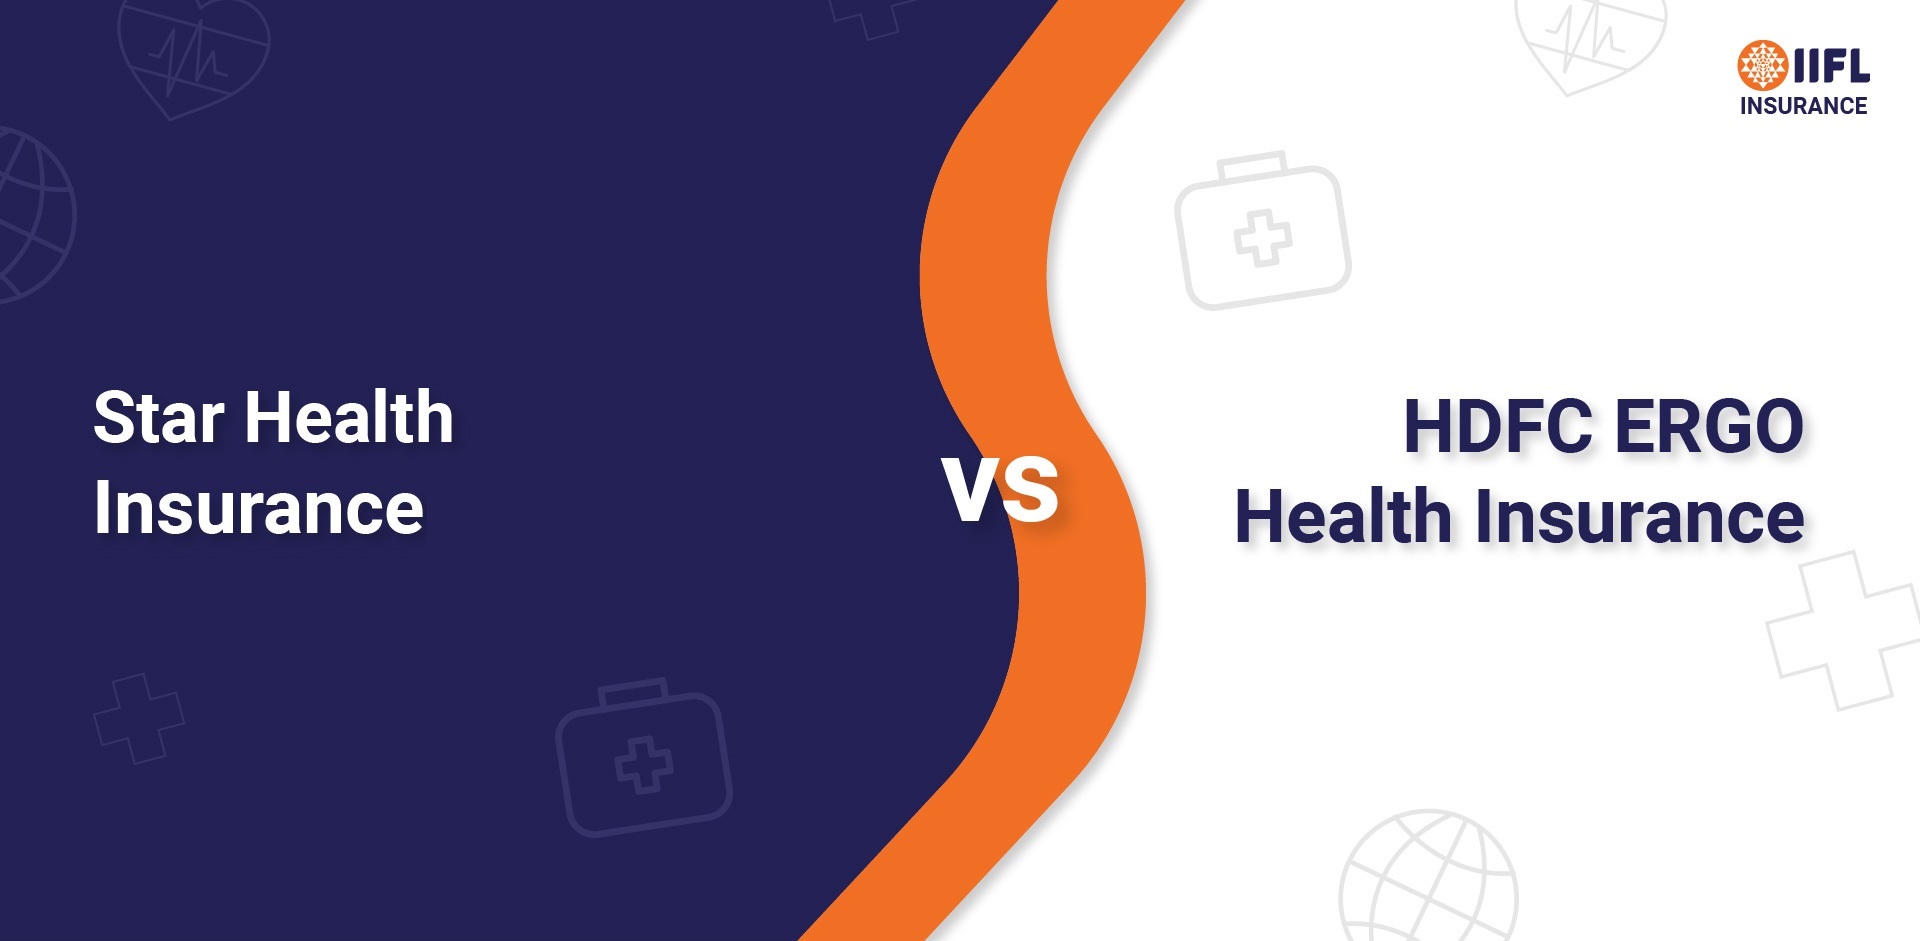 Star Health Insurance vs HDFC ERGO Health Insurance